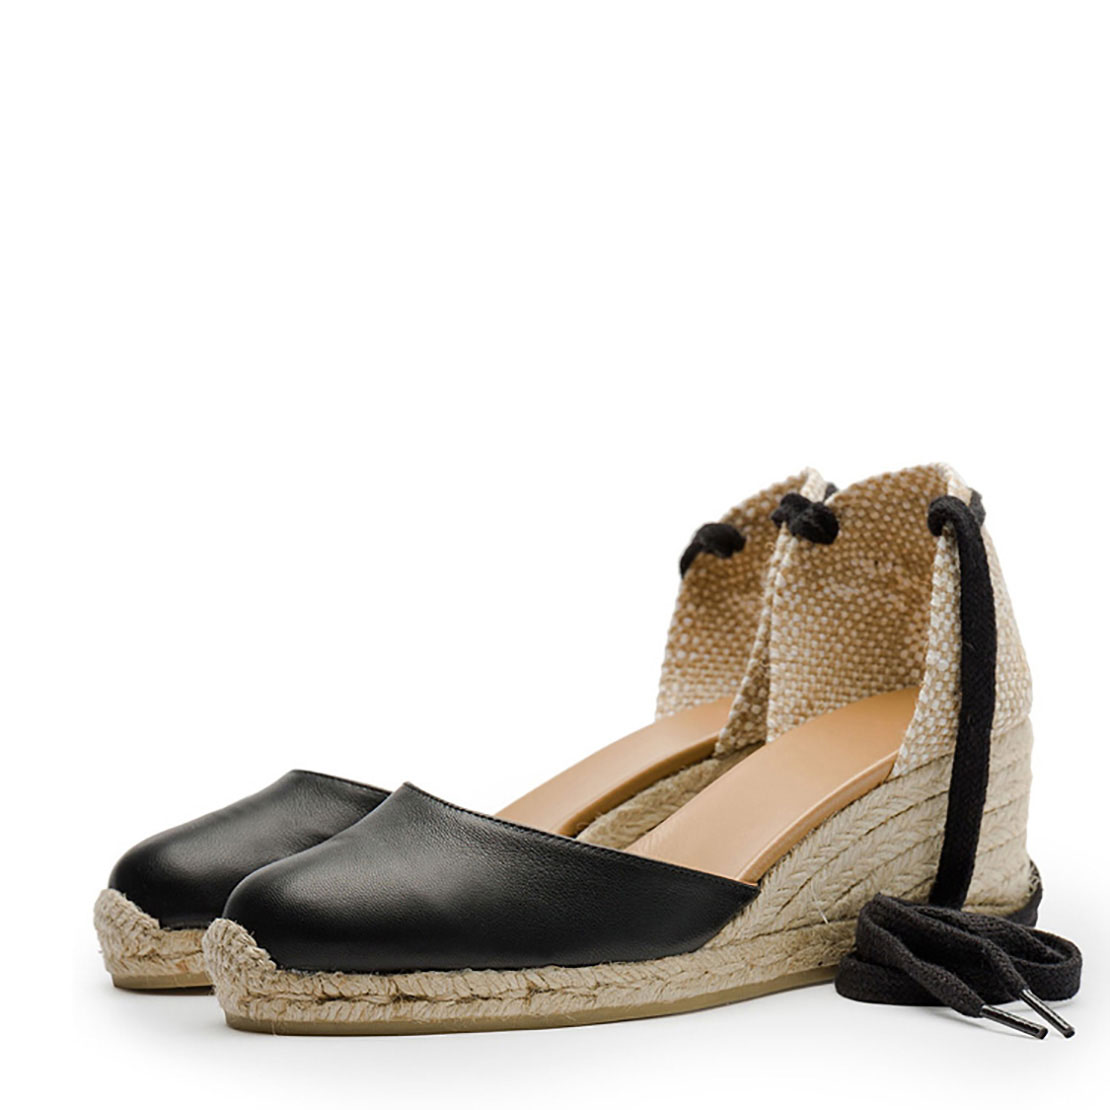 Casual wedge heels women sandals shoes YBS3028